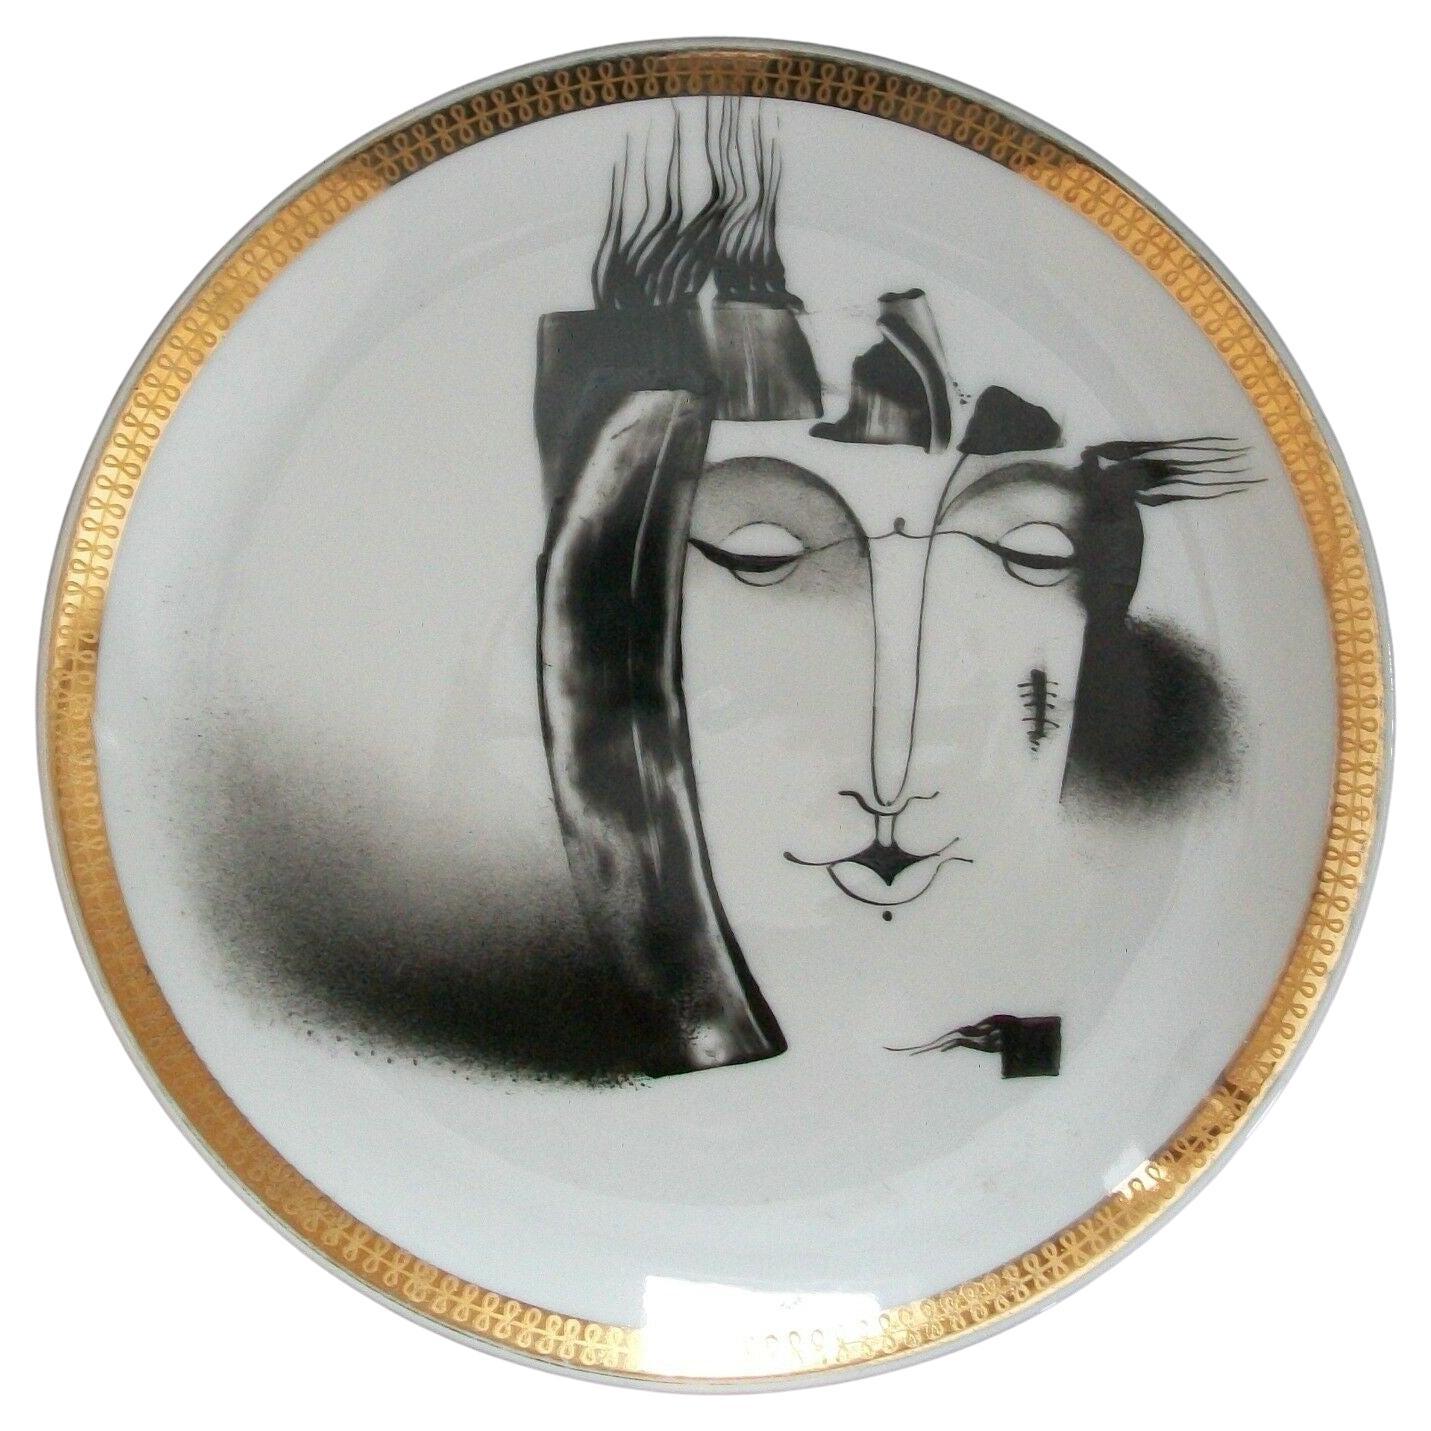 Helga Melnbarde, 'Portrait', Hand Painted Ceramic Plate, Latvia, circa 1988